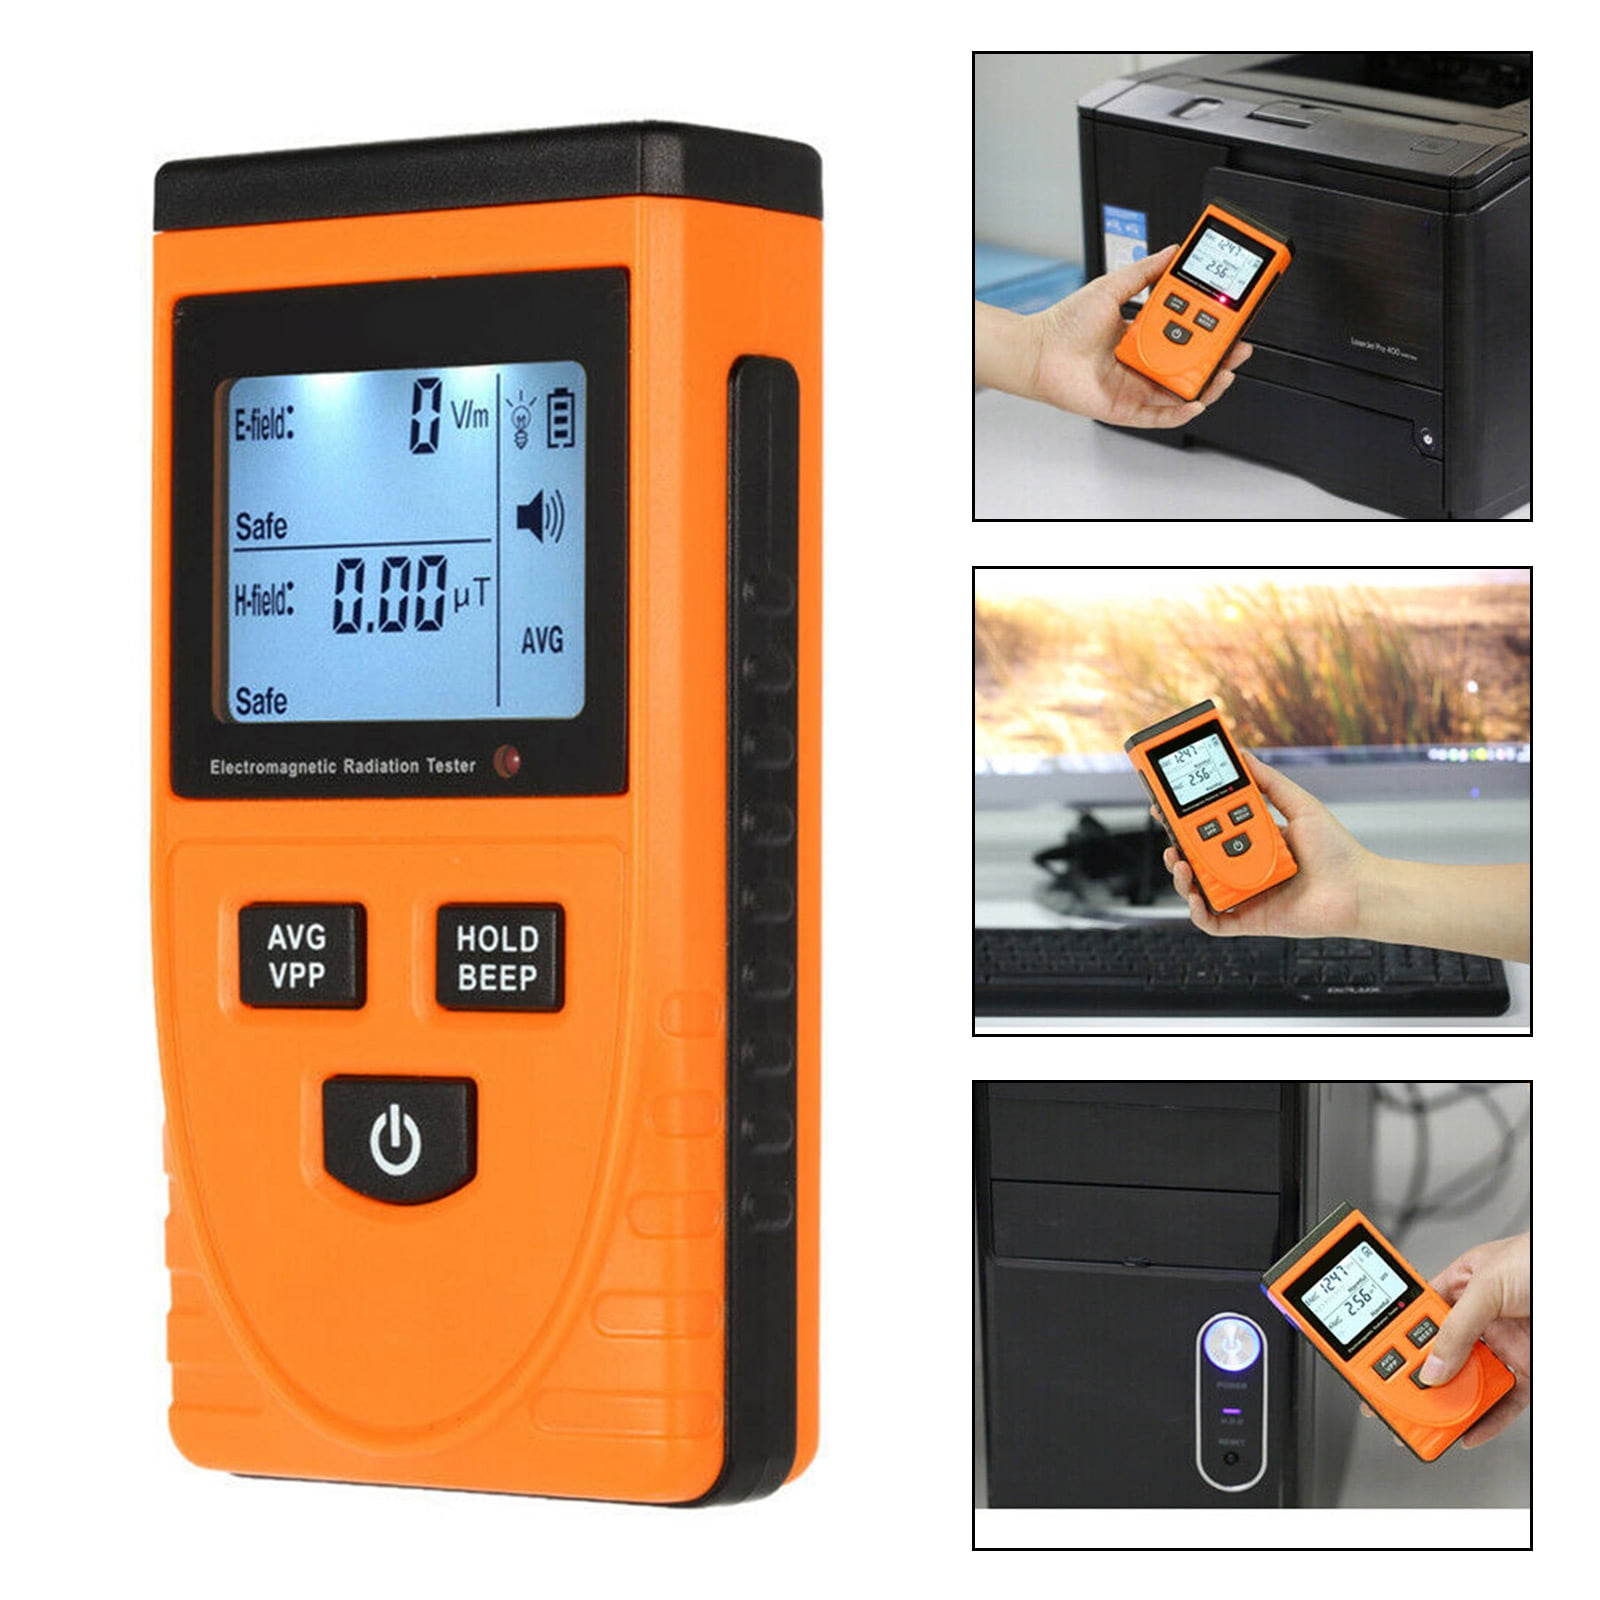 Wintact High Precision Handheld Mini Digital LCD EMF Tester Counter G2N0 